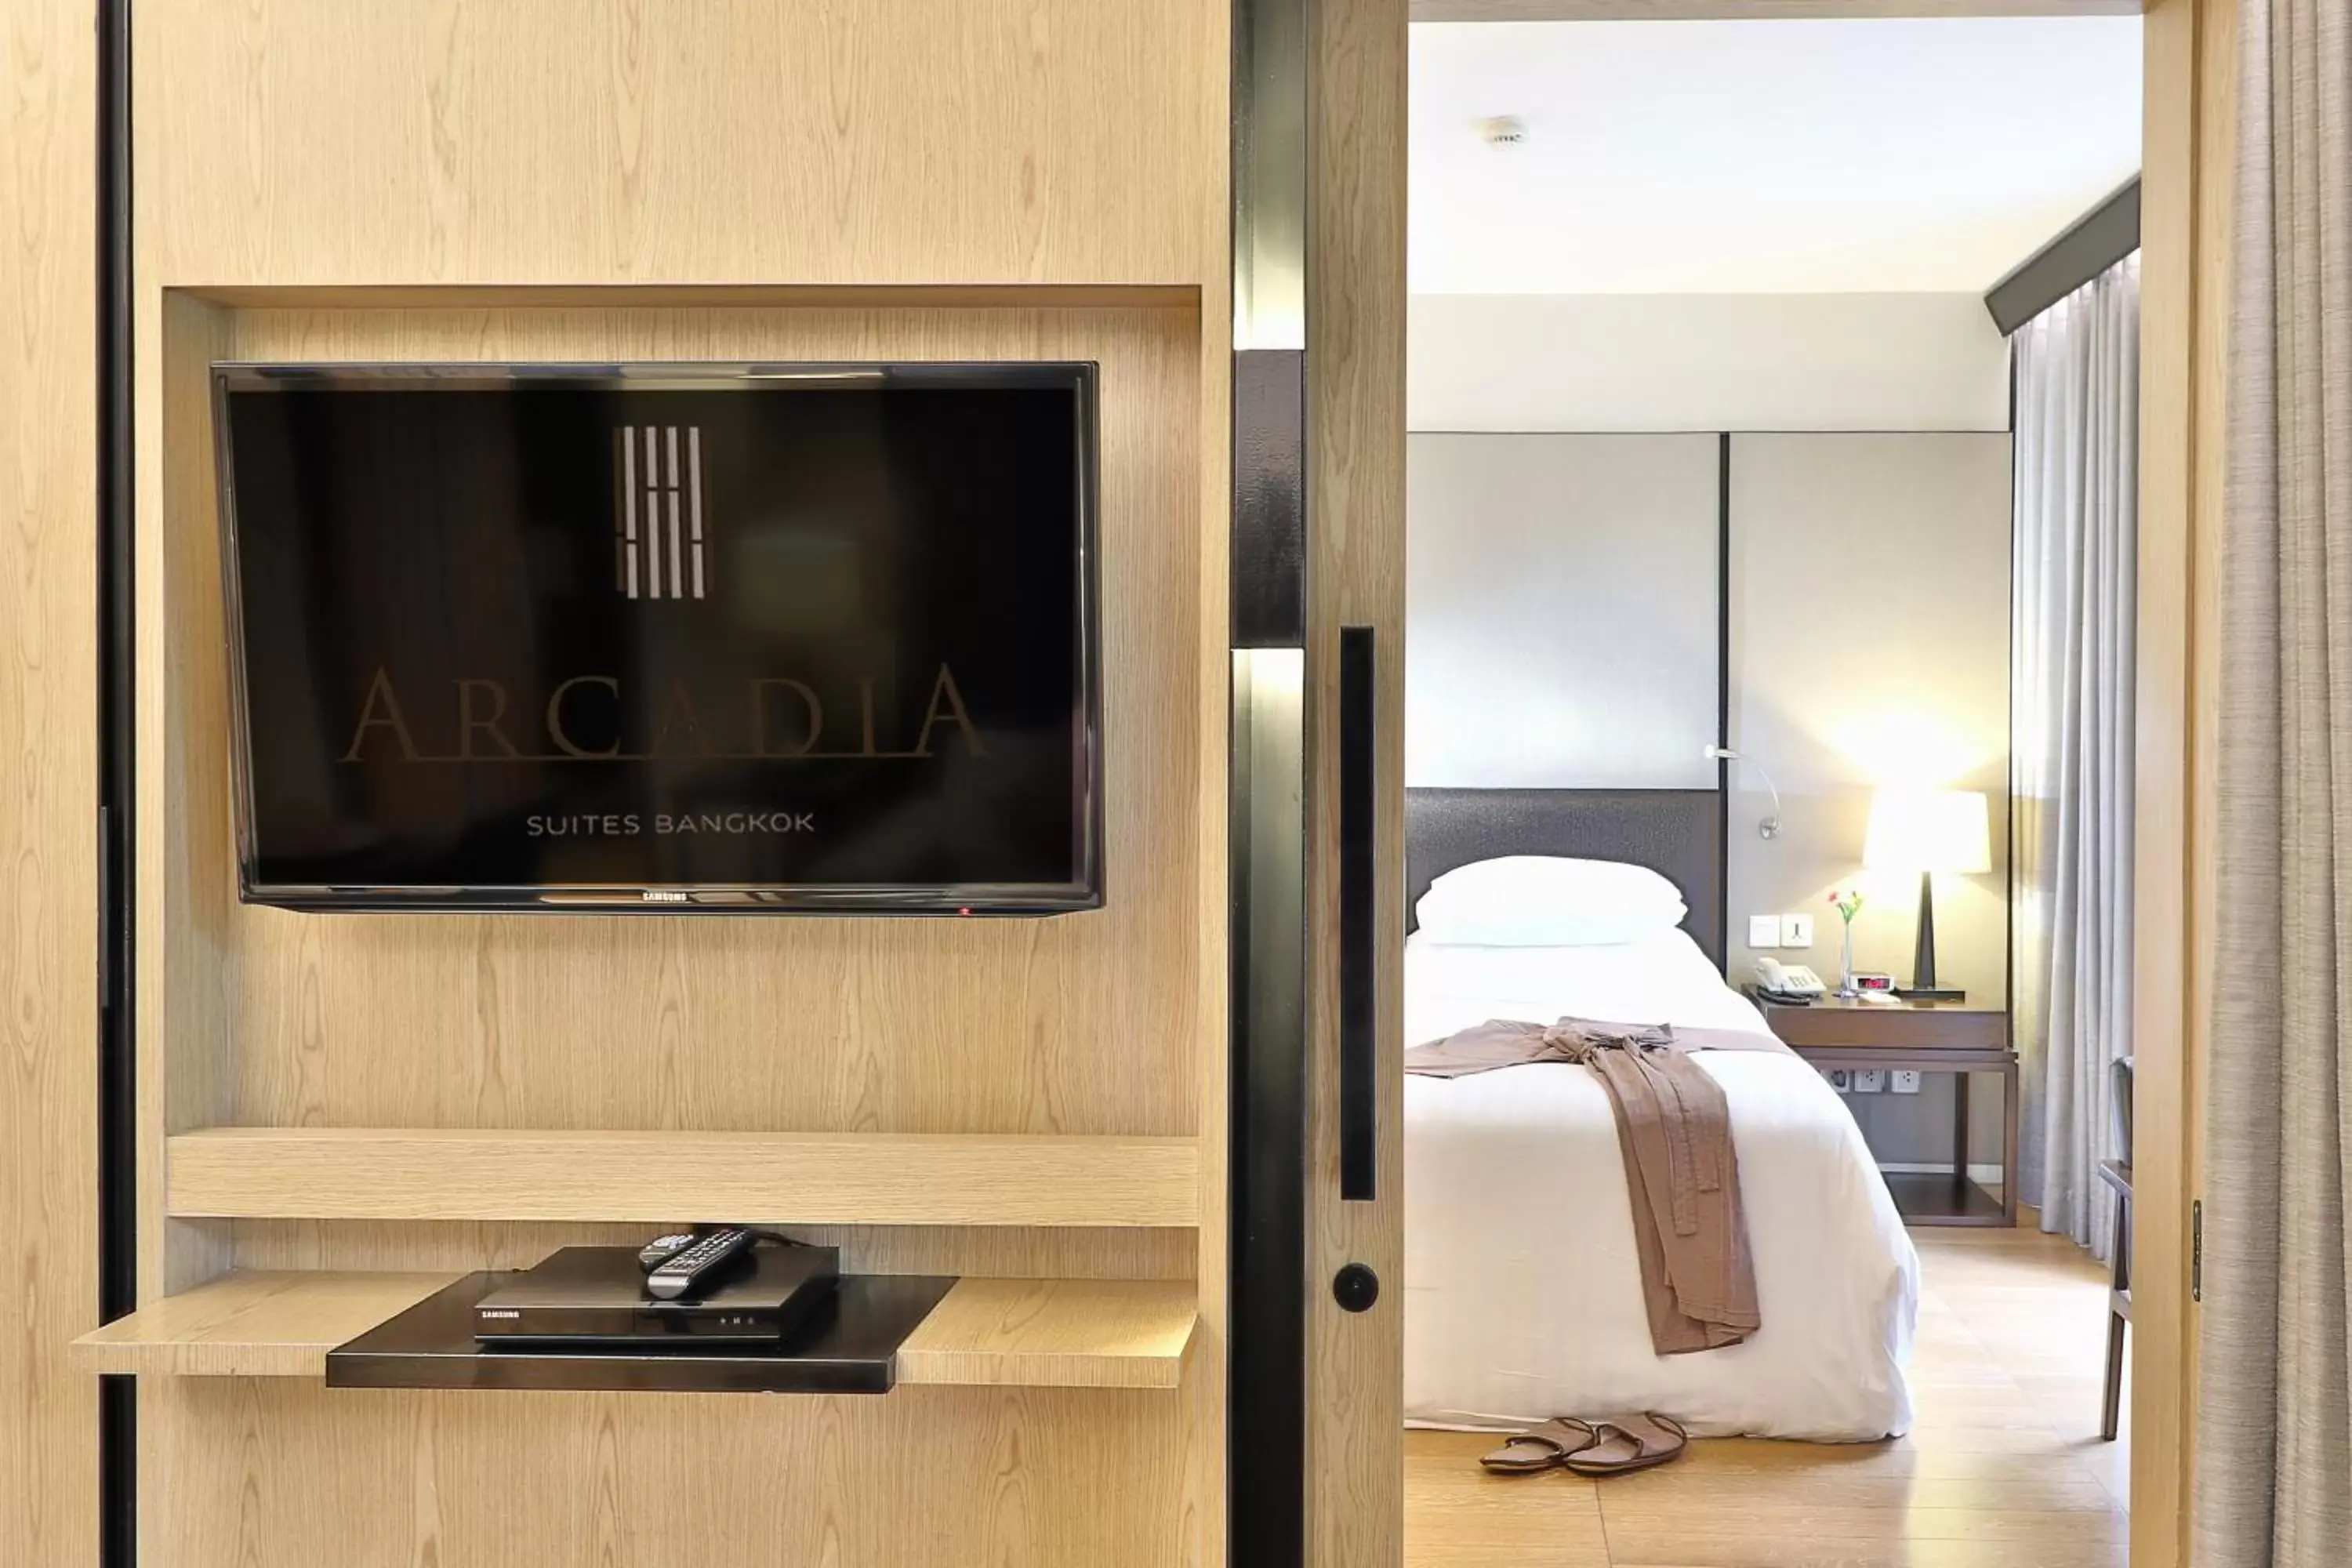 Bedroom, TV/Entertainment Center in Arcadia Suites Bangkok